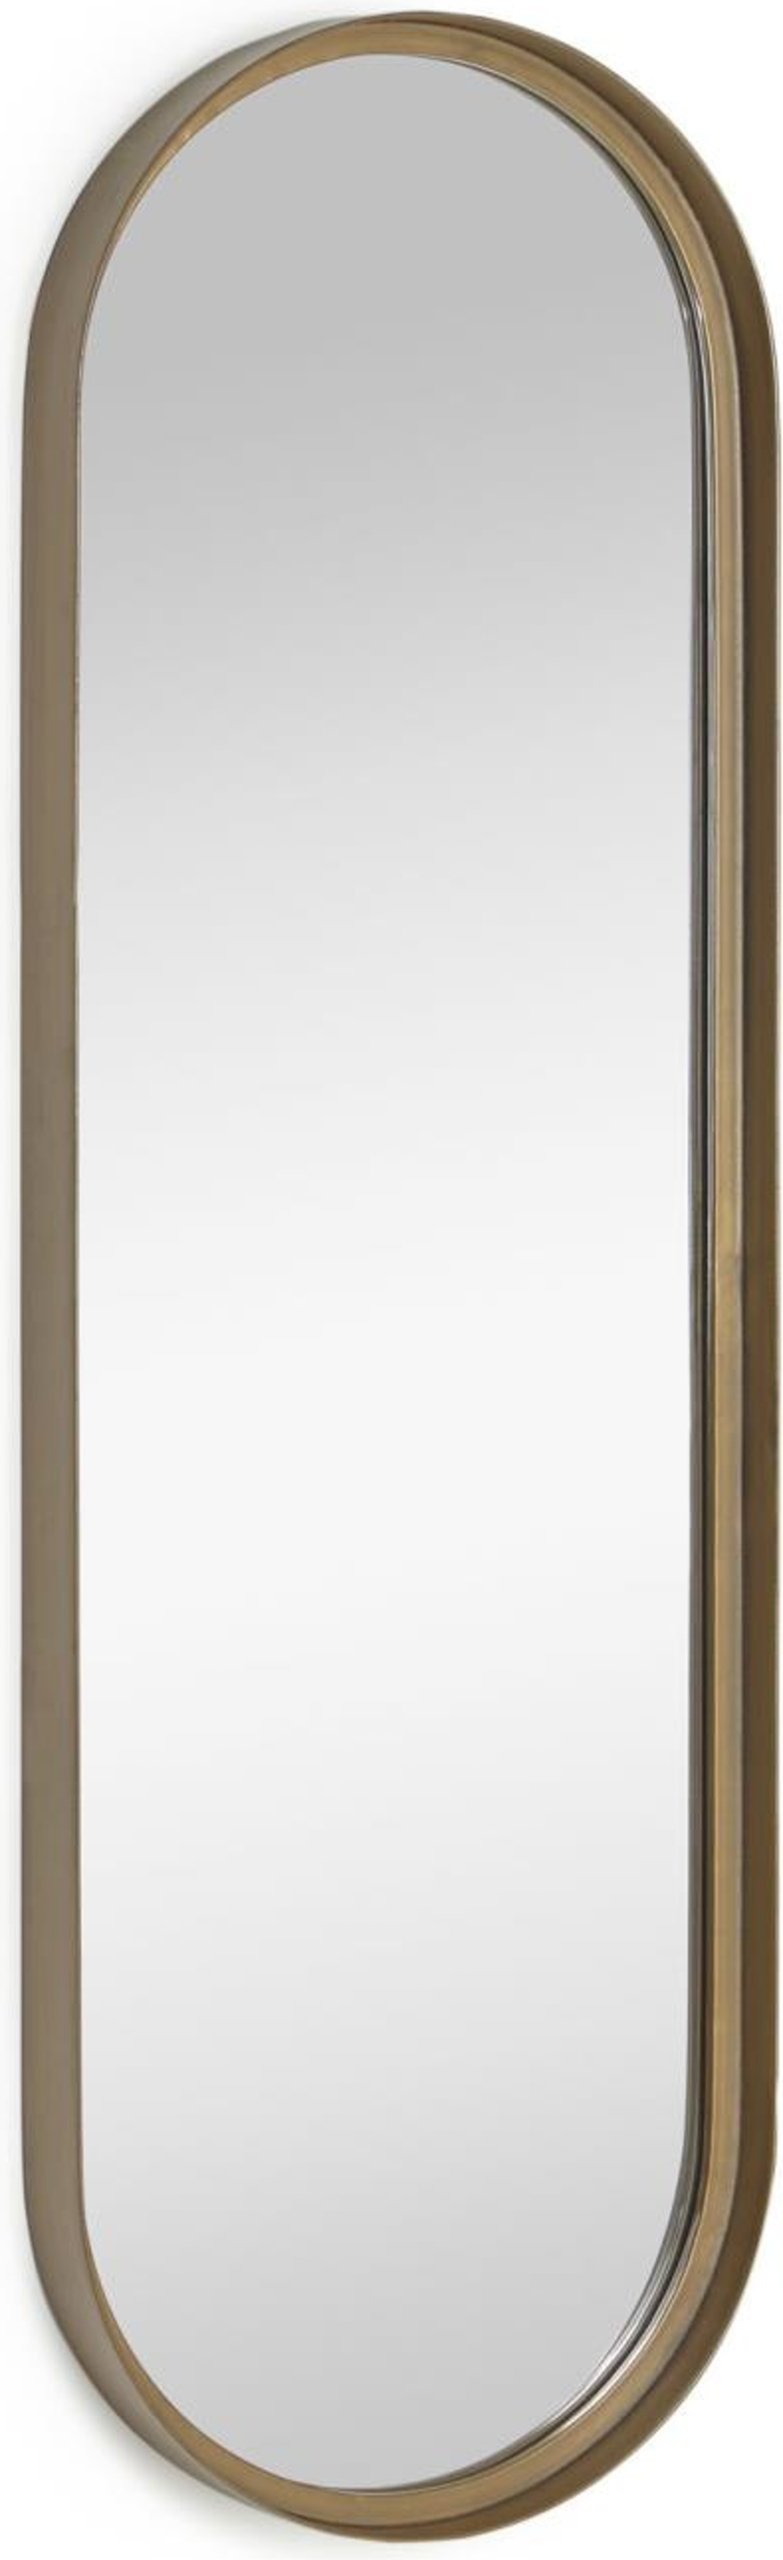 Tiare, Vægspejl, metal by Kave Home (H: 100 cm. B: 31.5 cm. L: 5 cm., Guld)